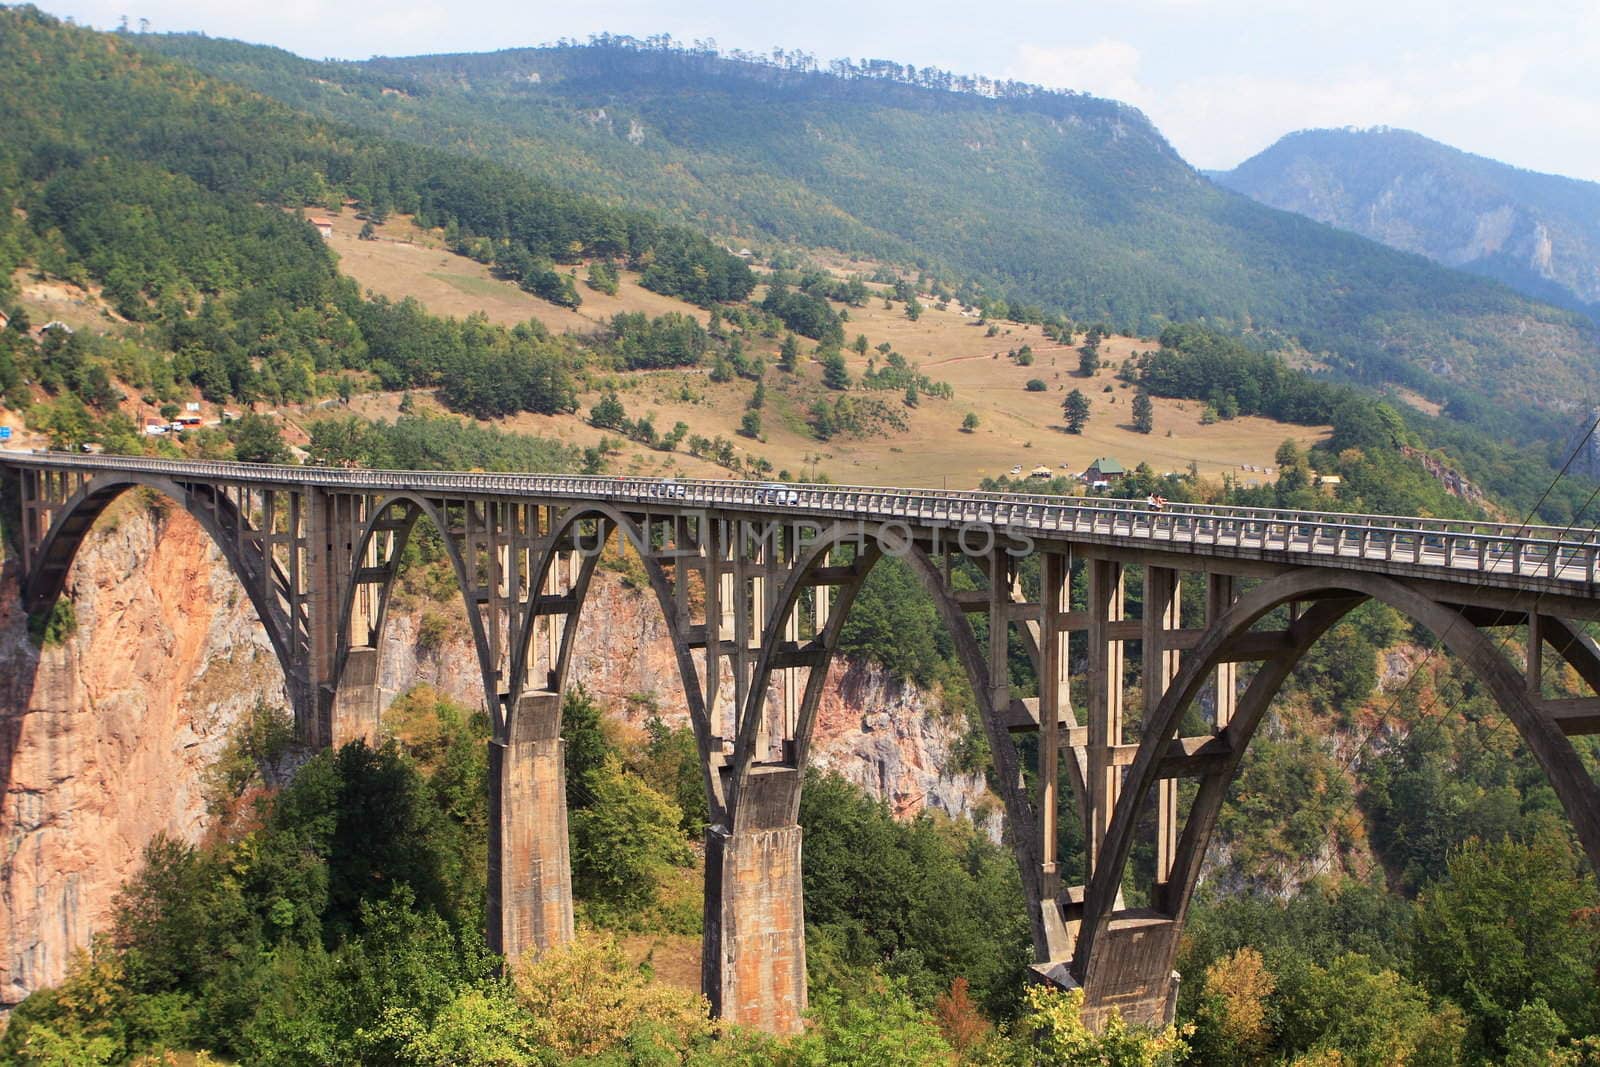 The Bridge Through Mountain River by Ledoct